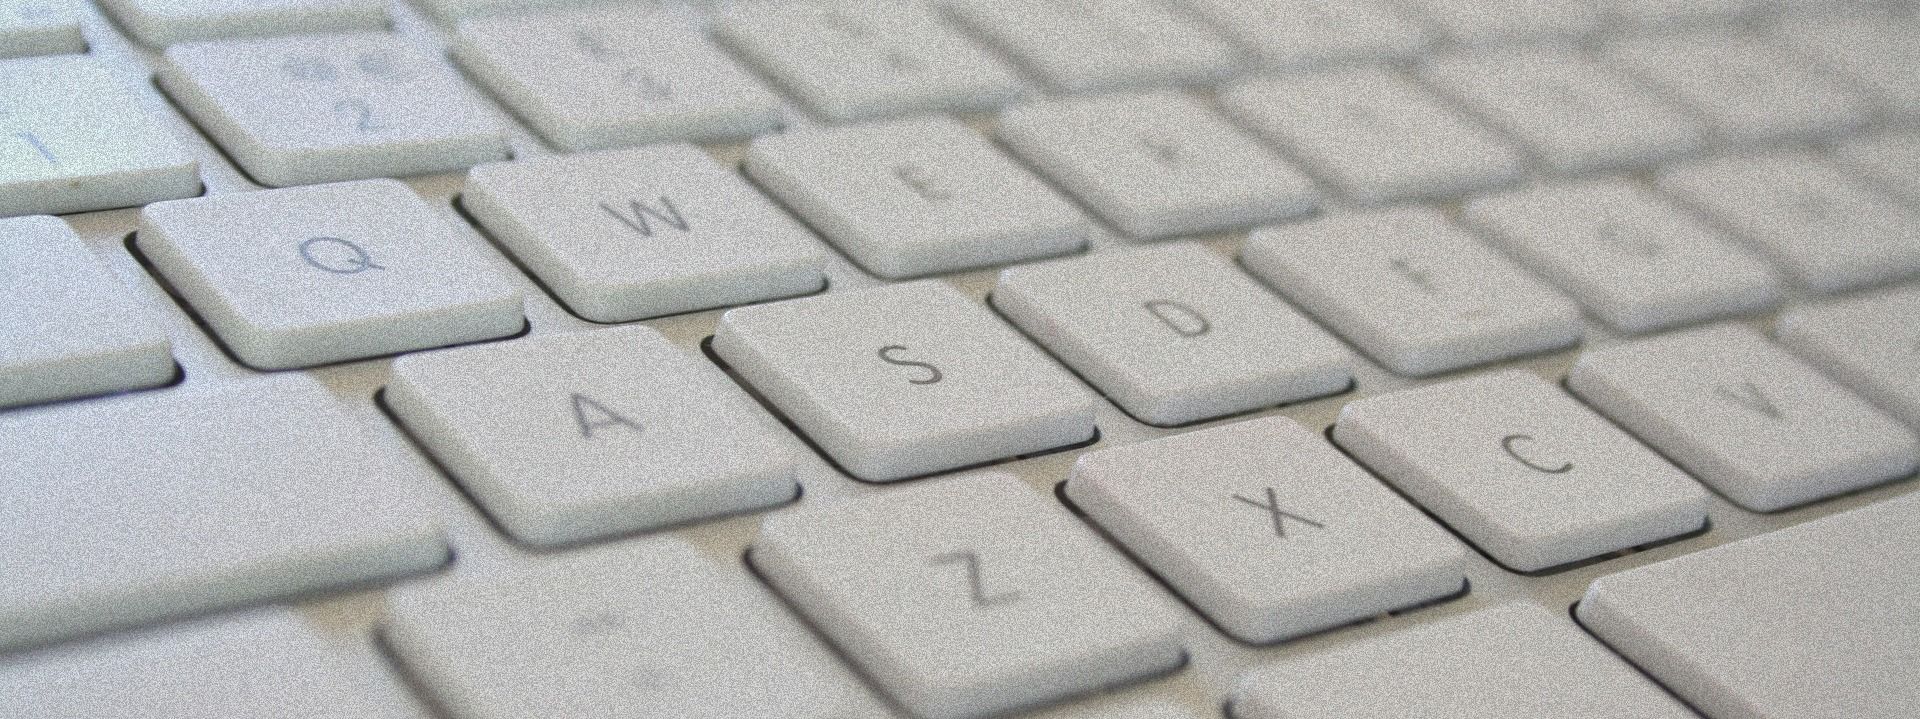 teclado-textos